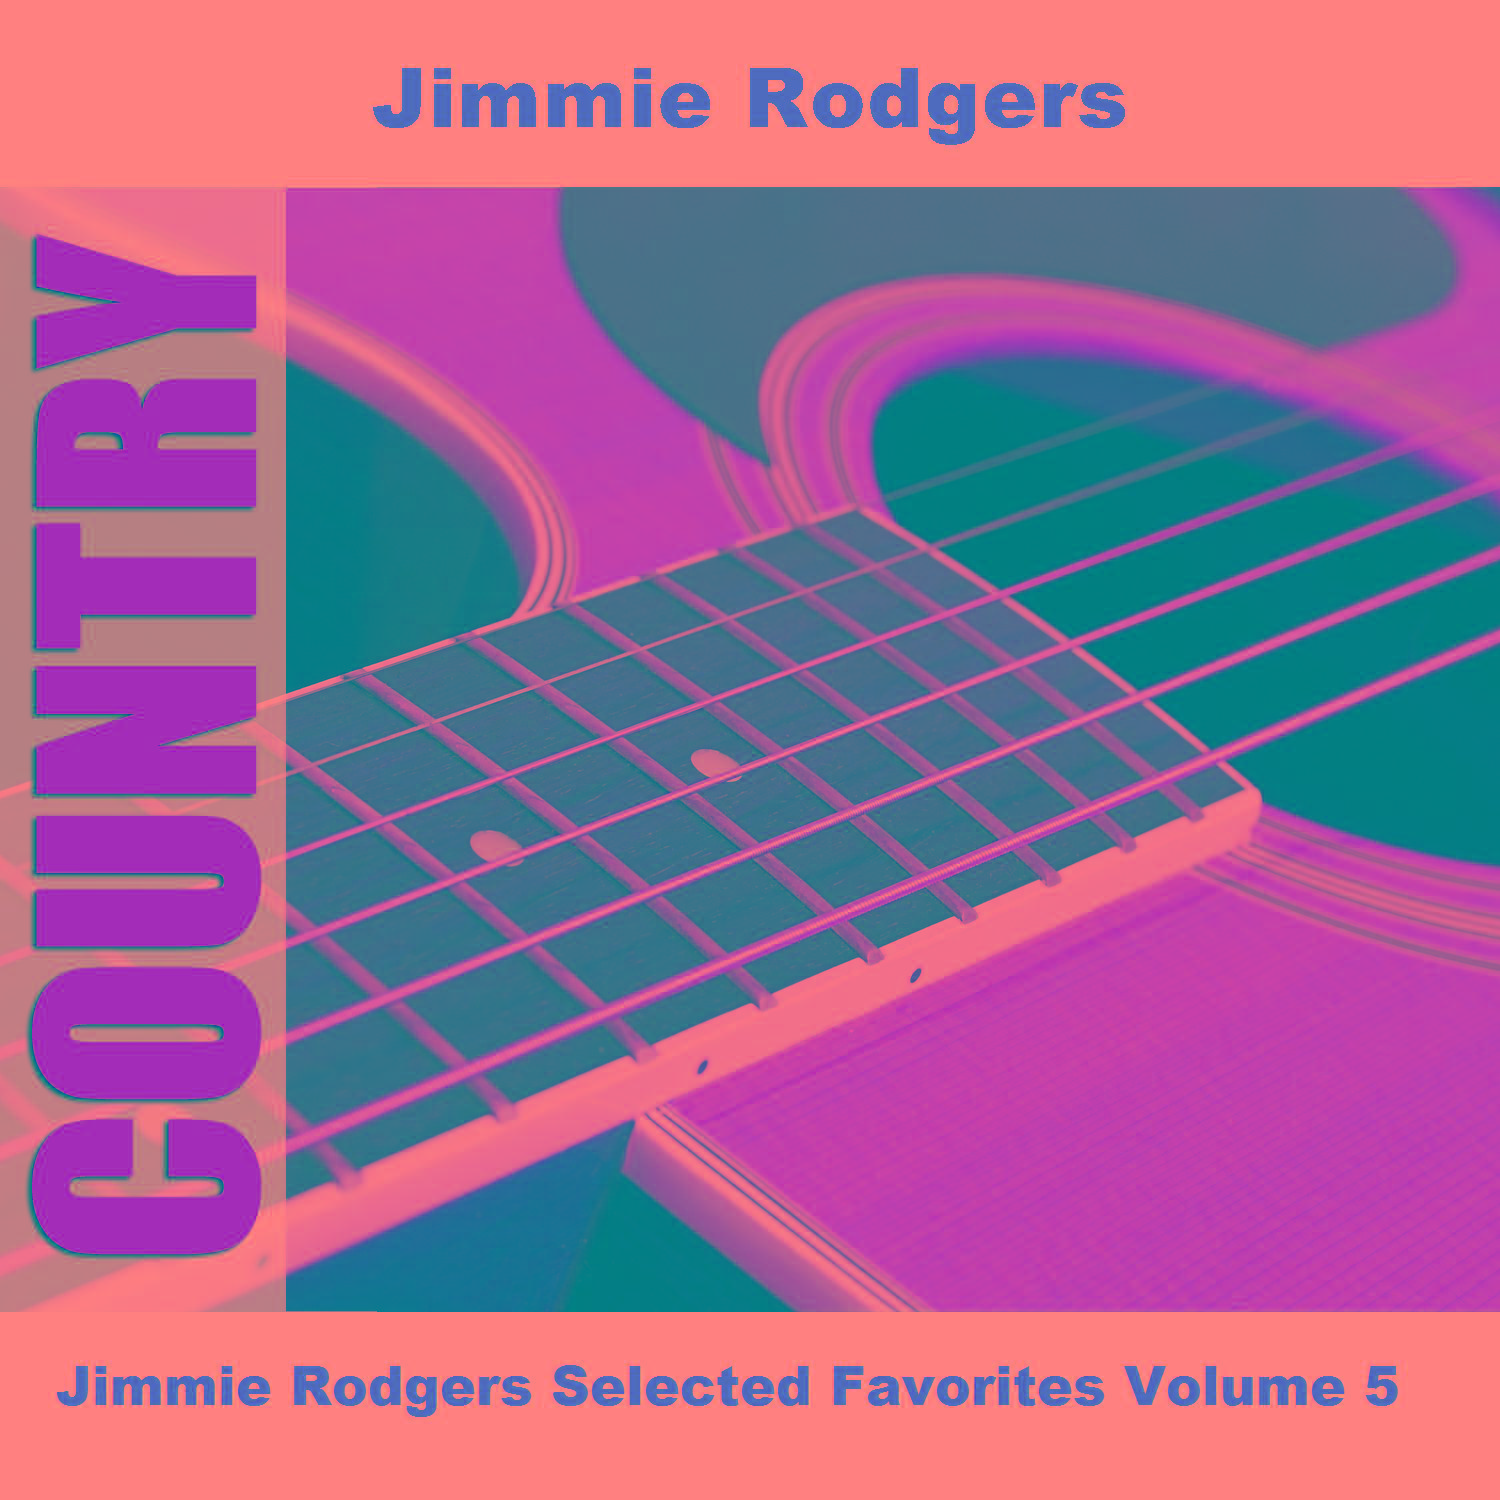 Jimmie Rodgers Selected Favorites Volume 5